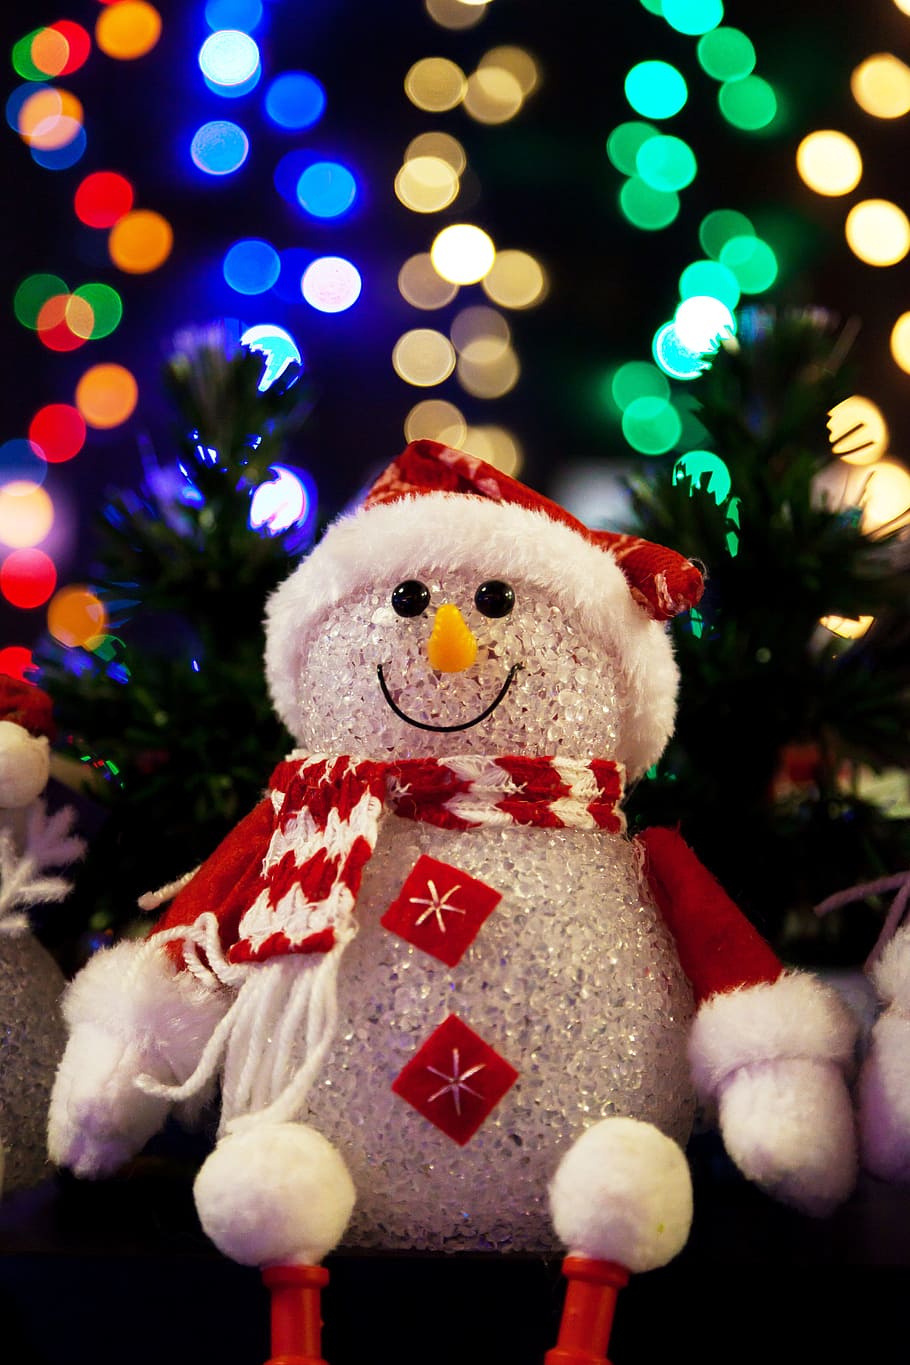 Celebration, Christmas, Cute, december, decoration, happy, holiday, ice, scarf, season